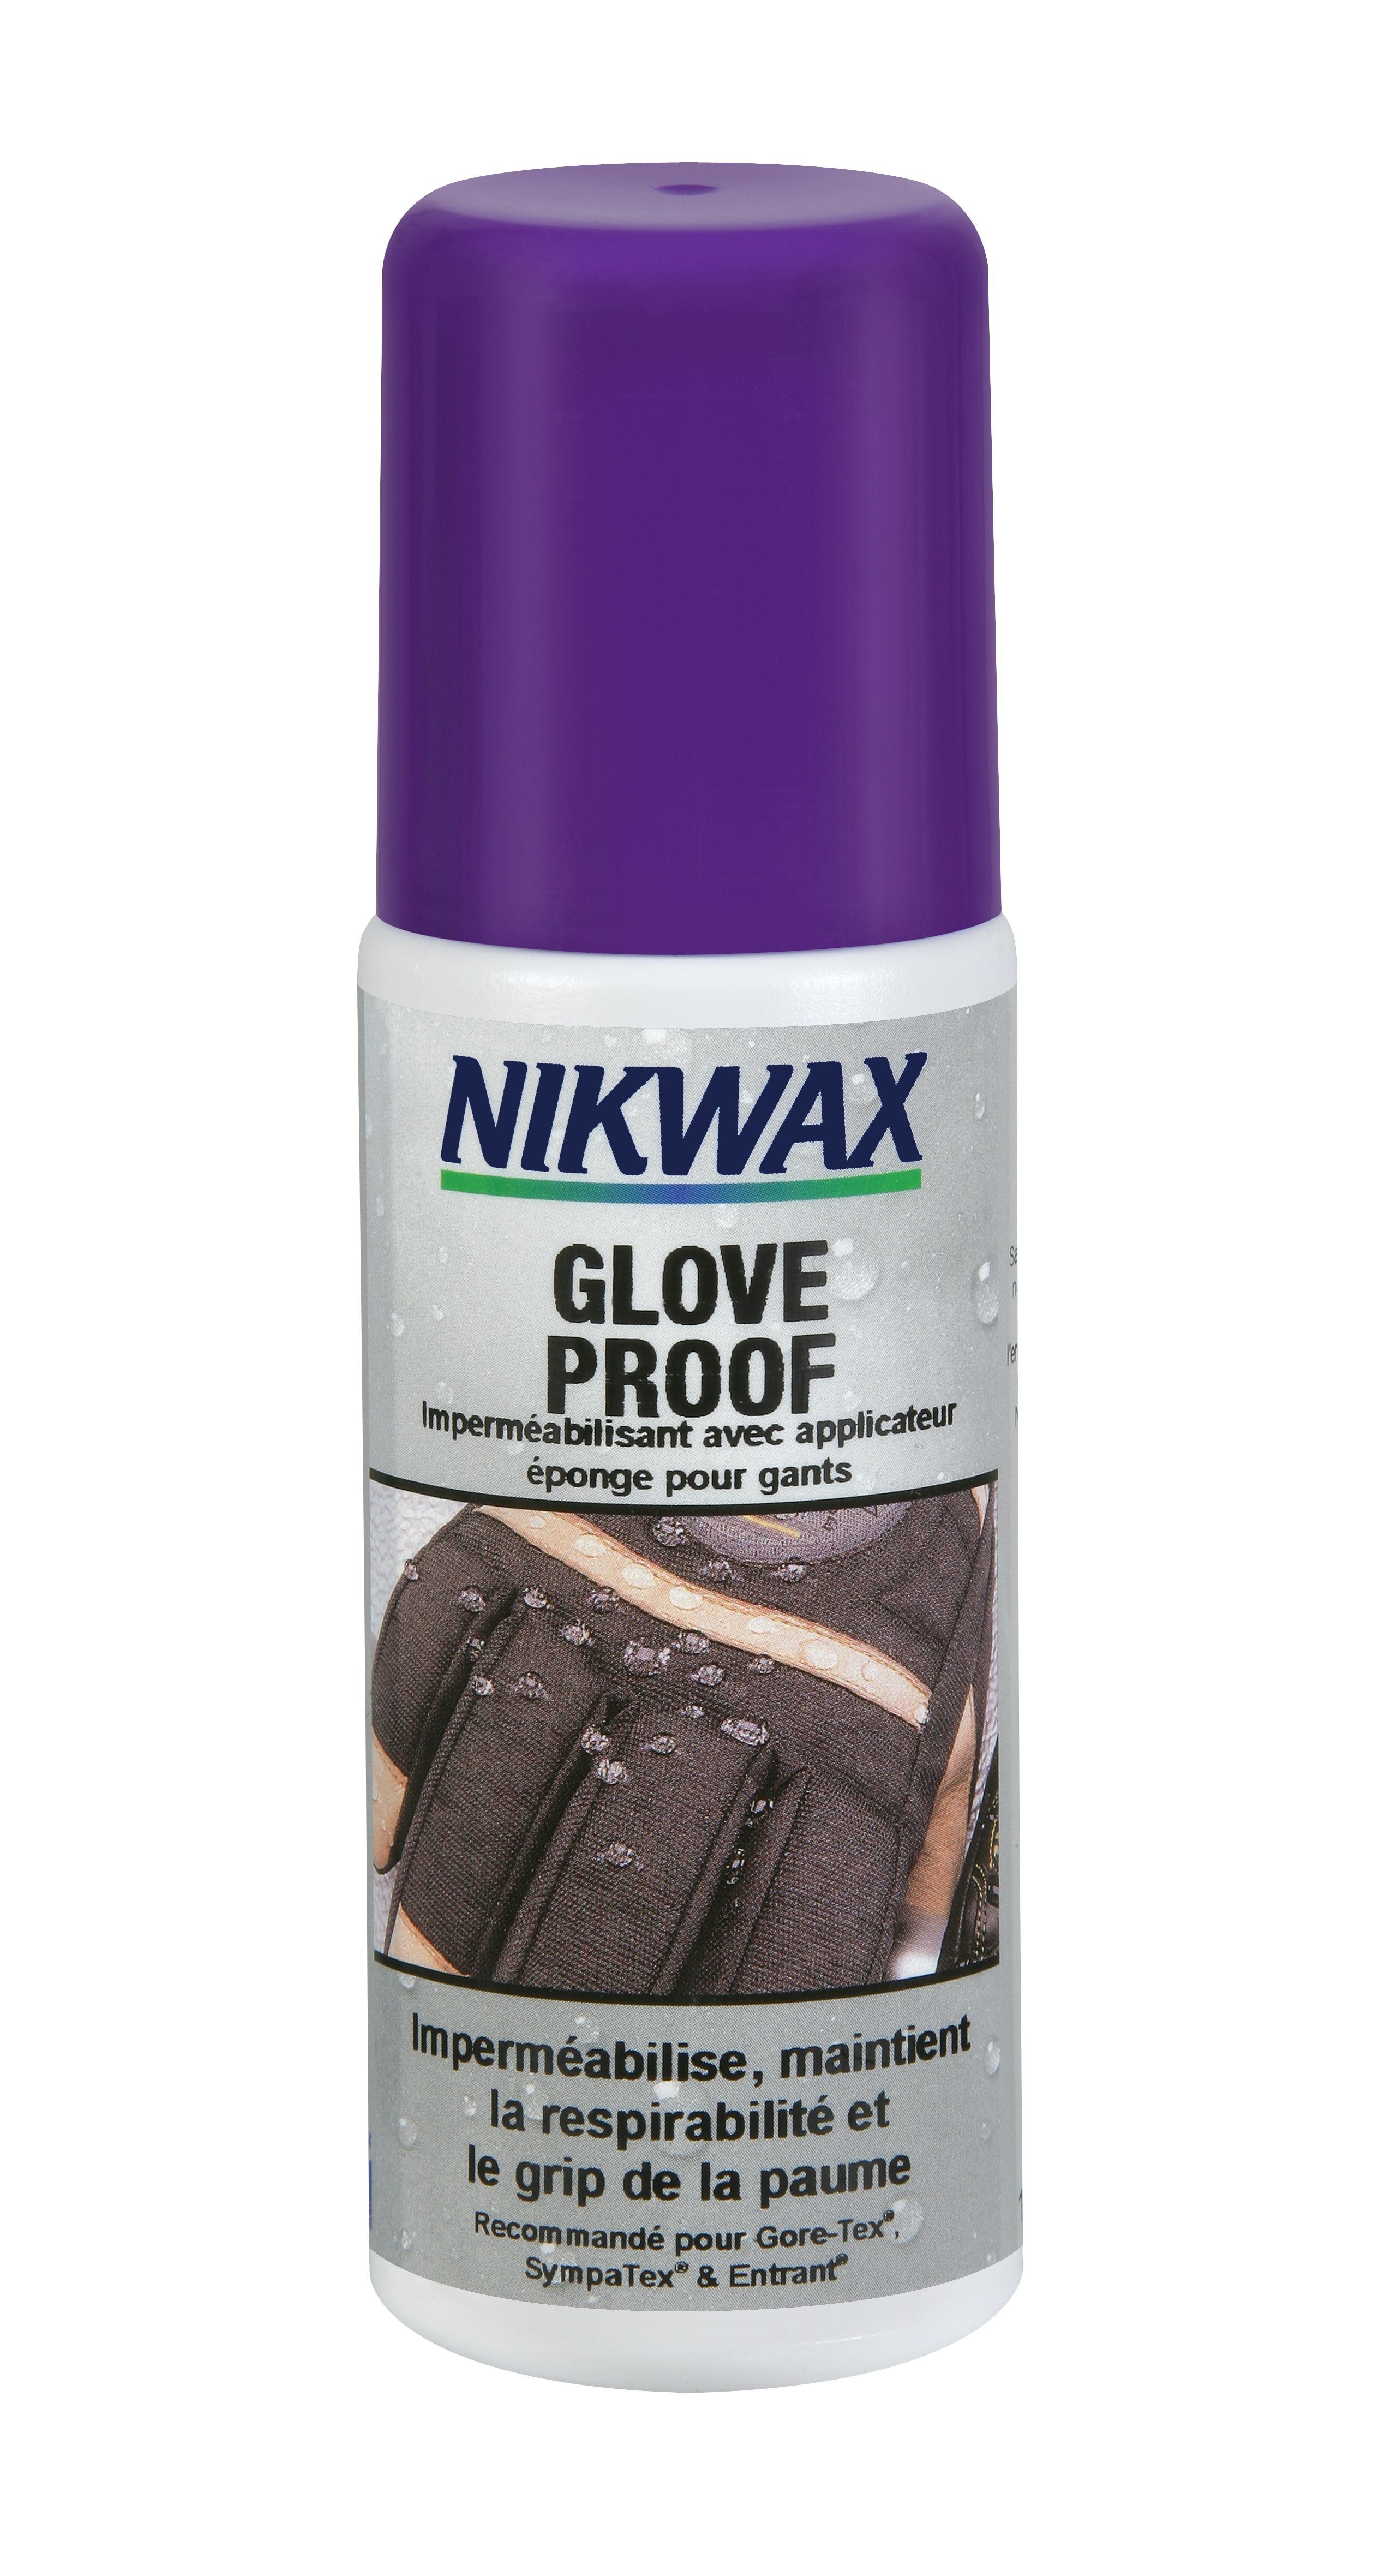 Nikwax - Glove Proof - Dry treatment